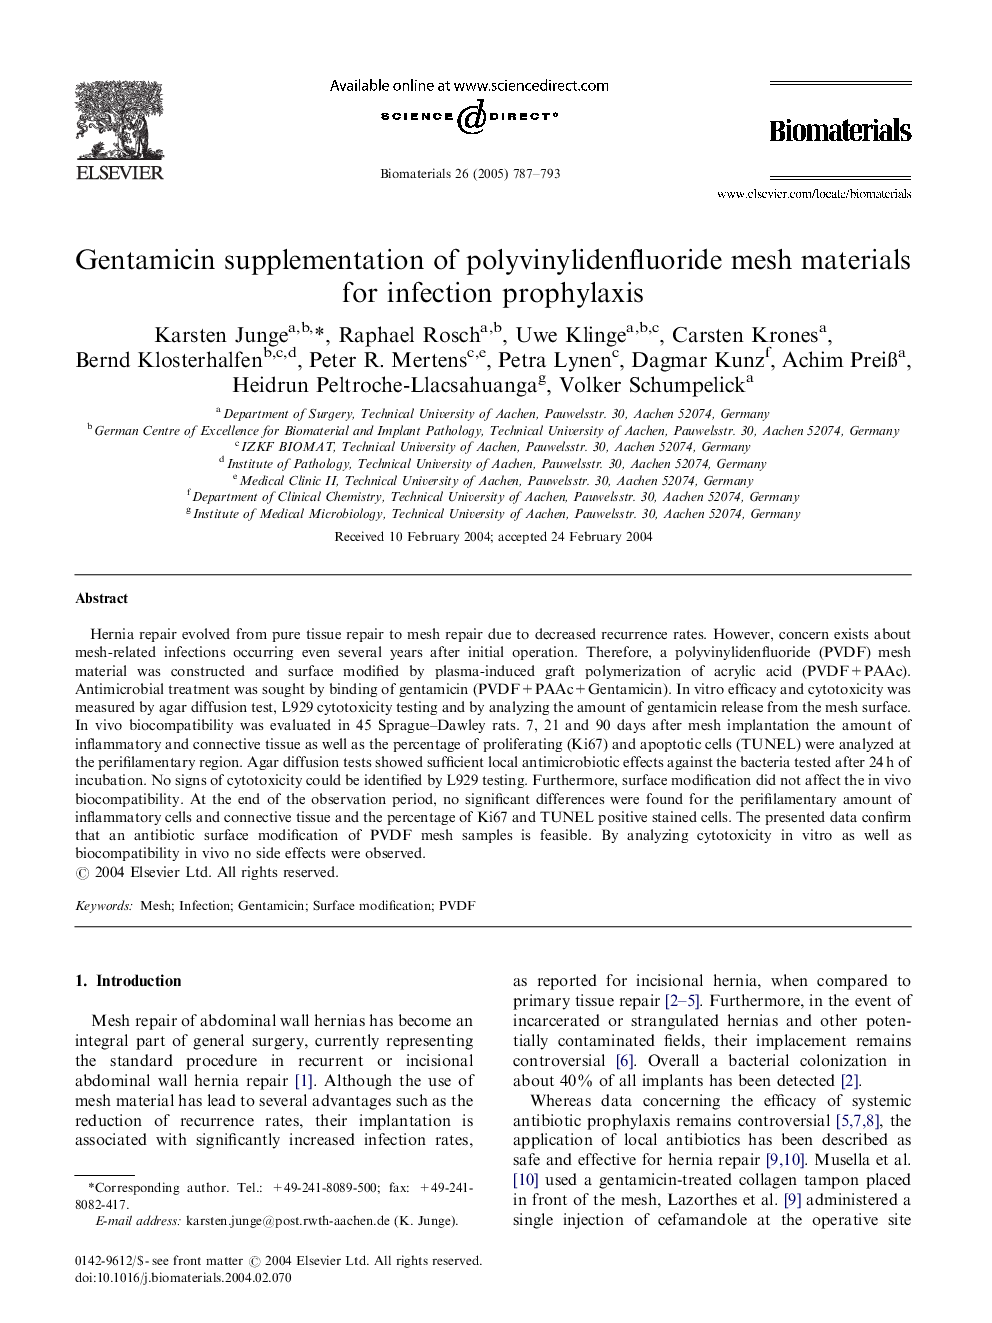 Gentamicin supplementation of polyvinylidenfluoride mesh materials for infection prophylaxis